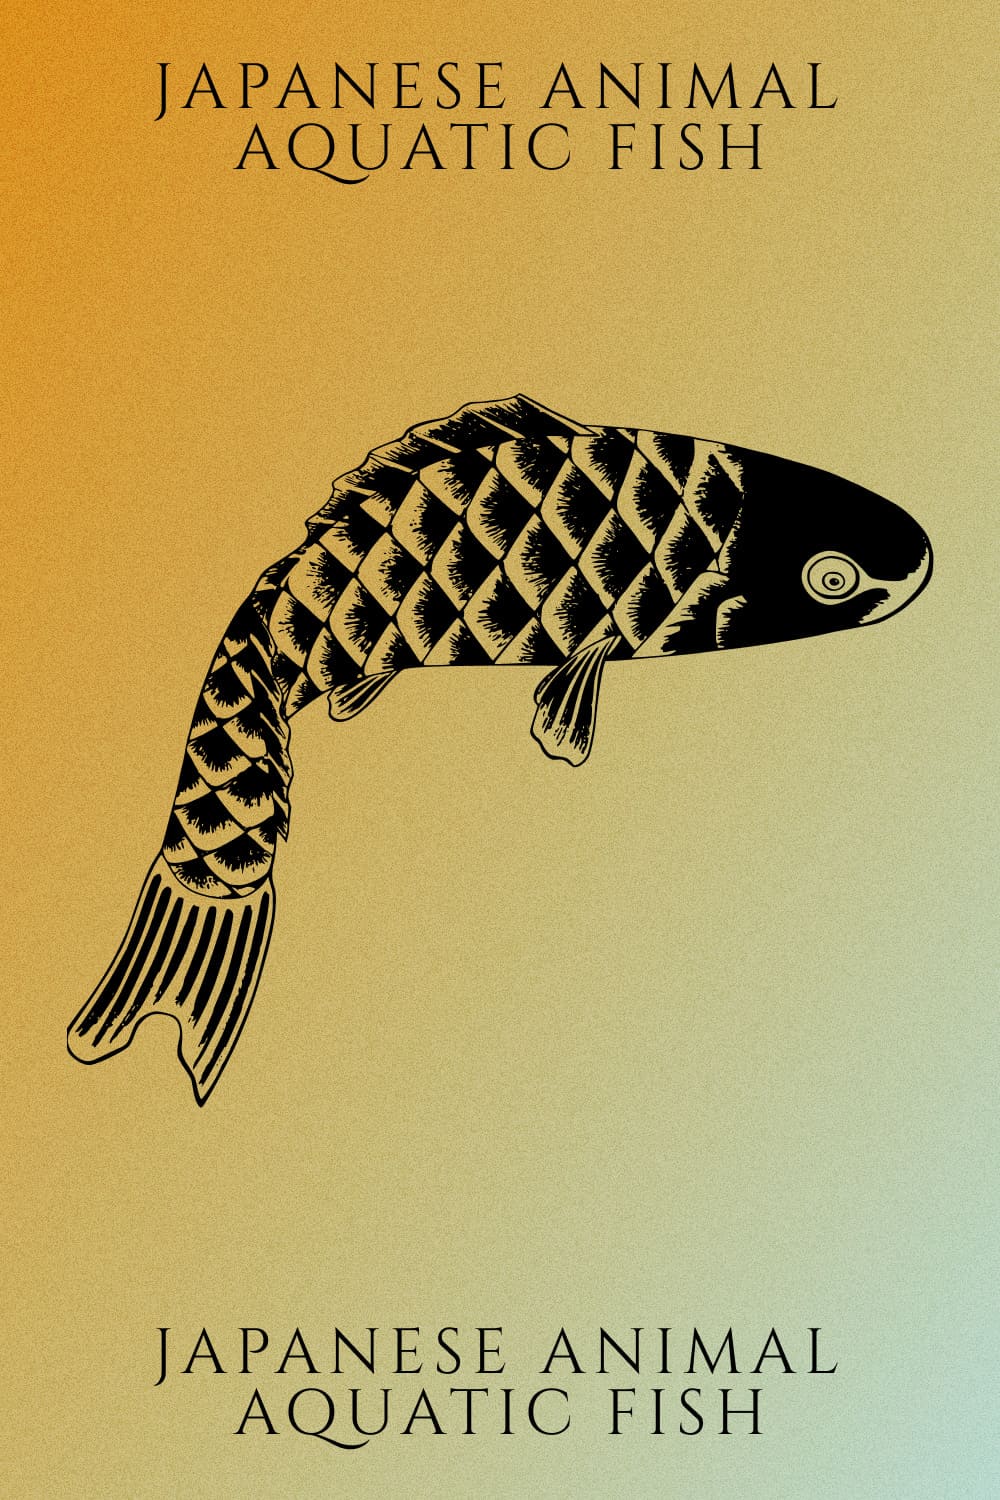 Japanese Animal Aquatic Fish - Pinterest Image.